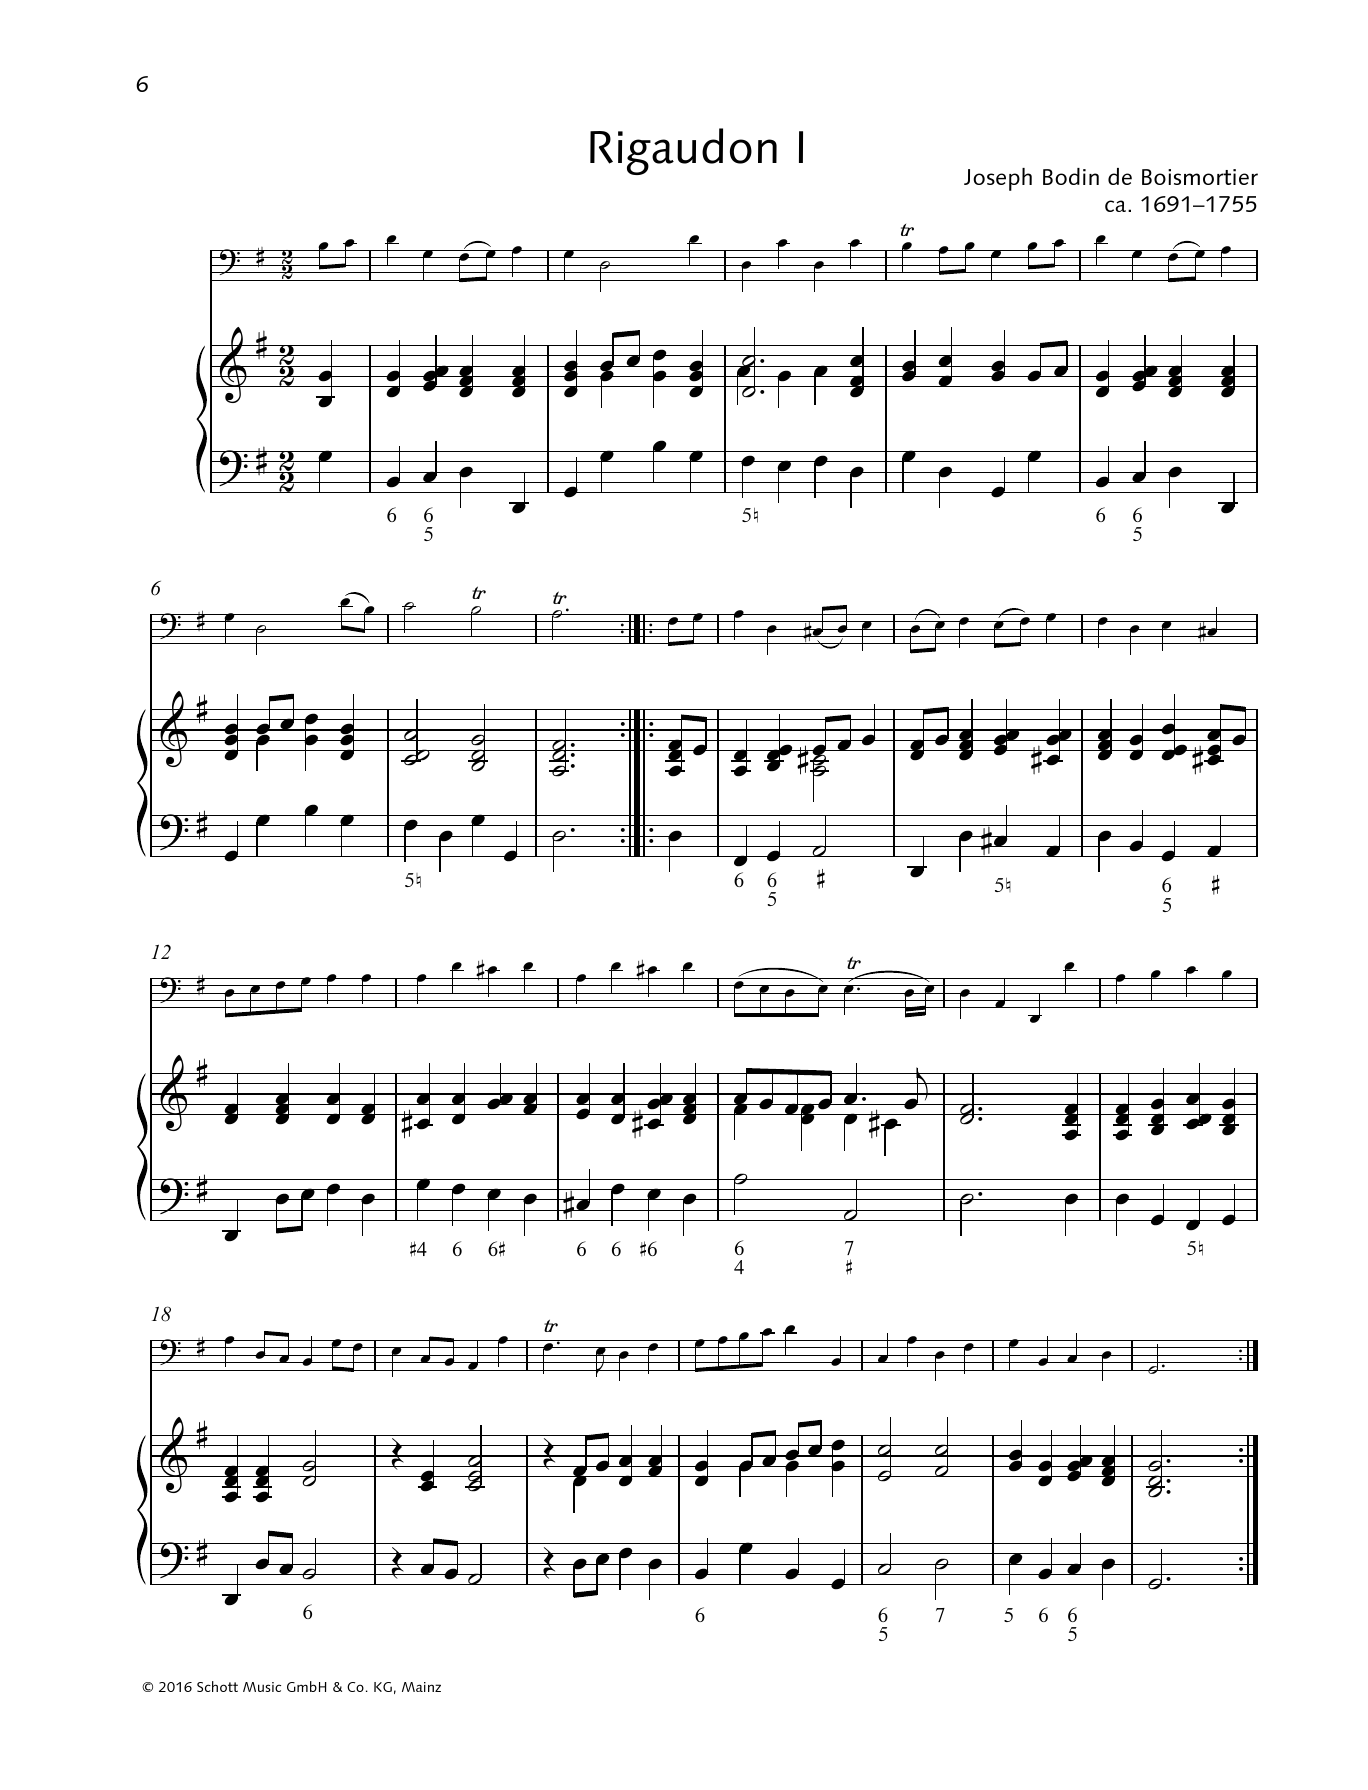 Joseph Bodin De Boismortier Rigaudon I/II Sheet Music Notes & Chords for String Solo - Download or Print PDF